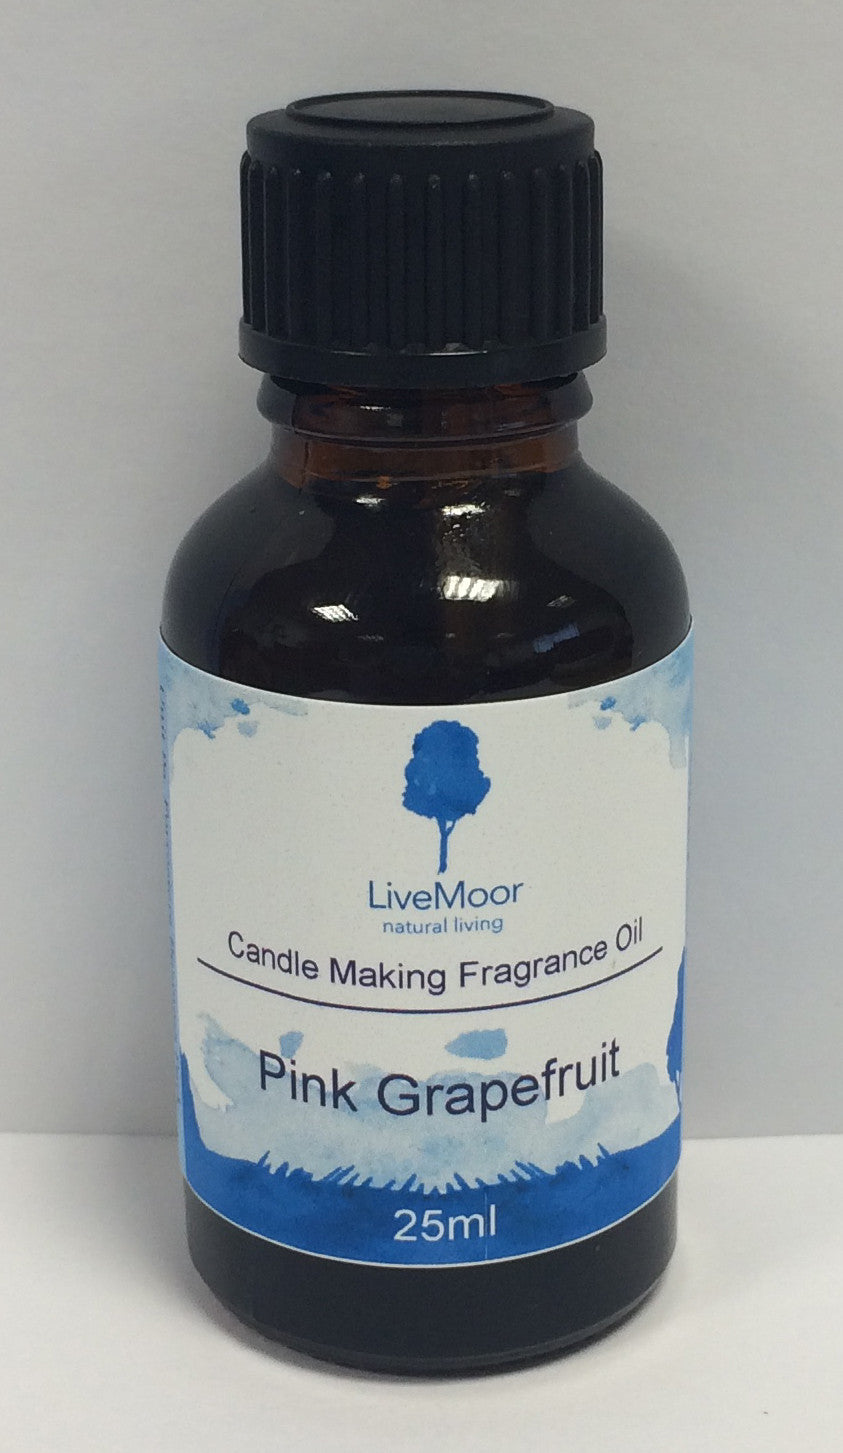 LiveMoor Fragrance Oil - Pink Grapefruit - 25ml